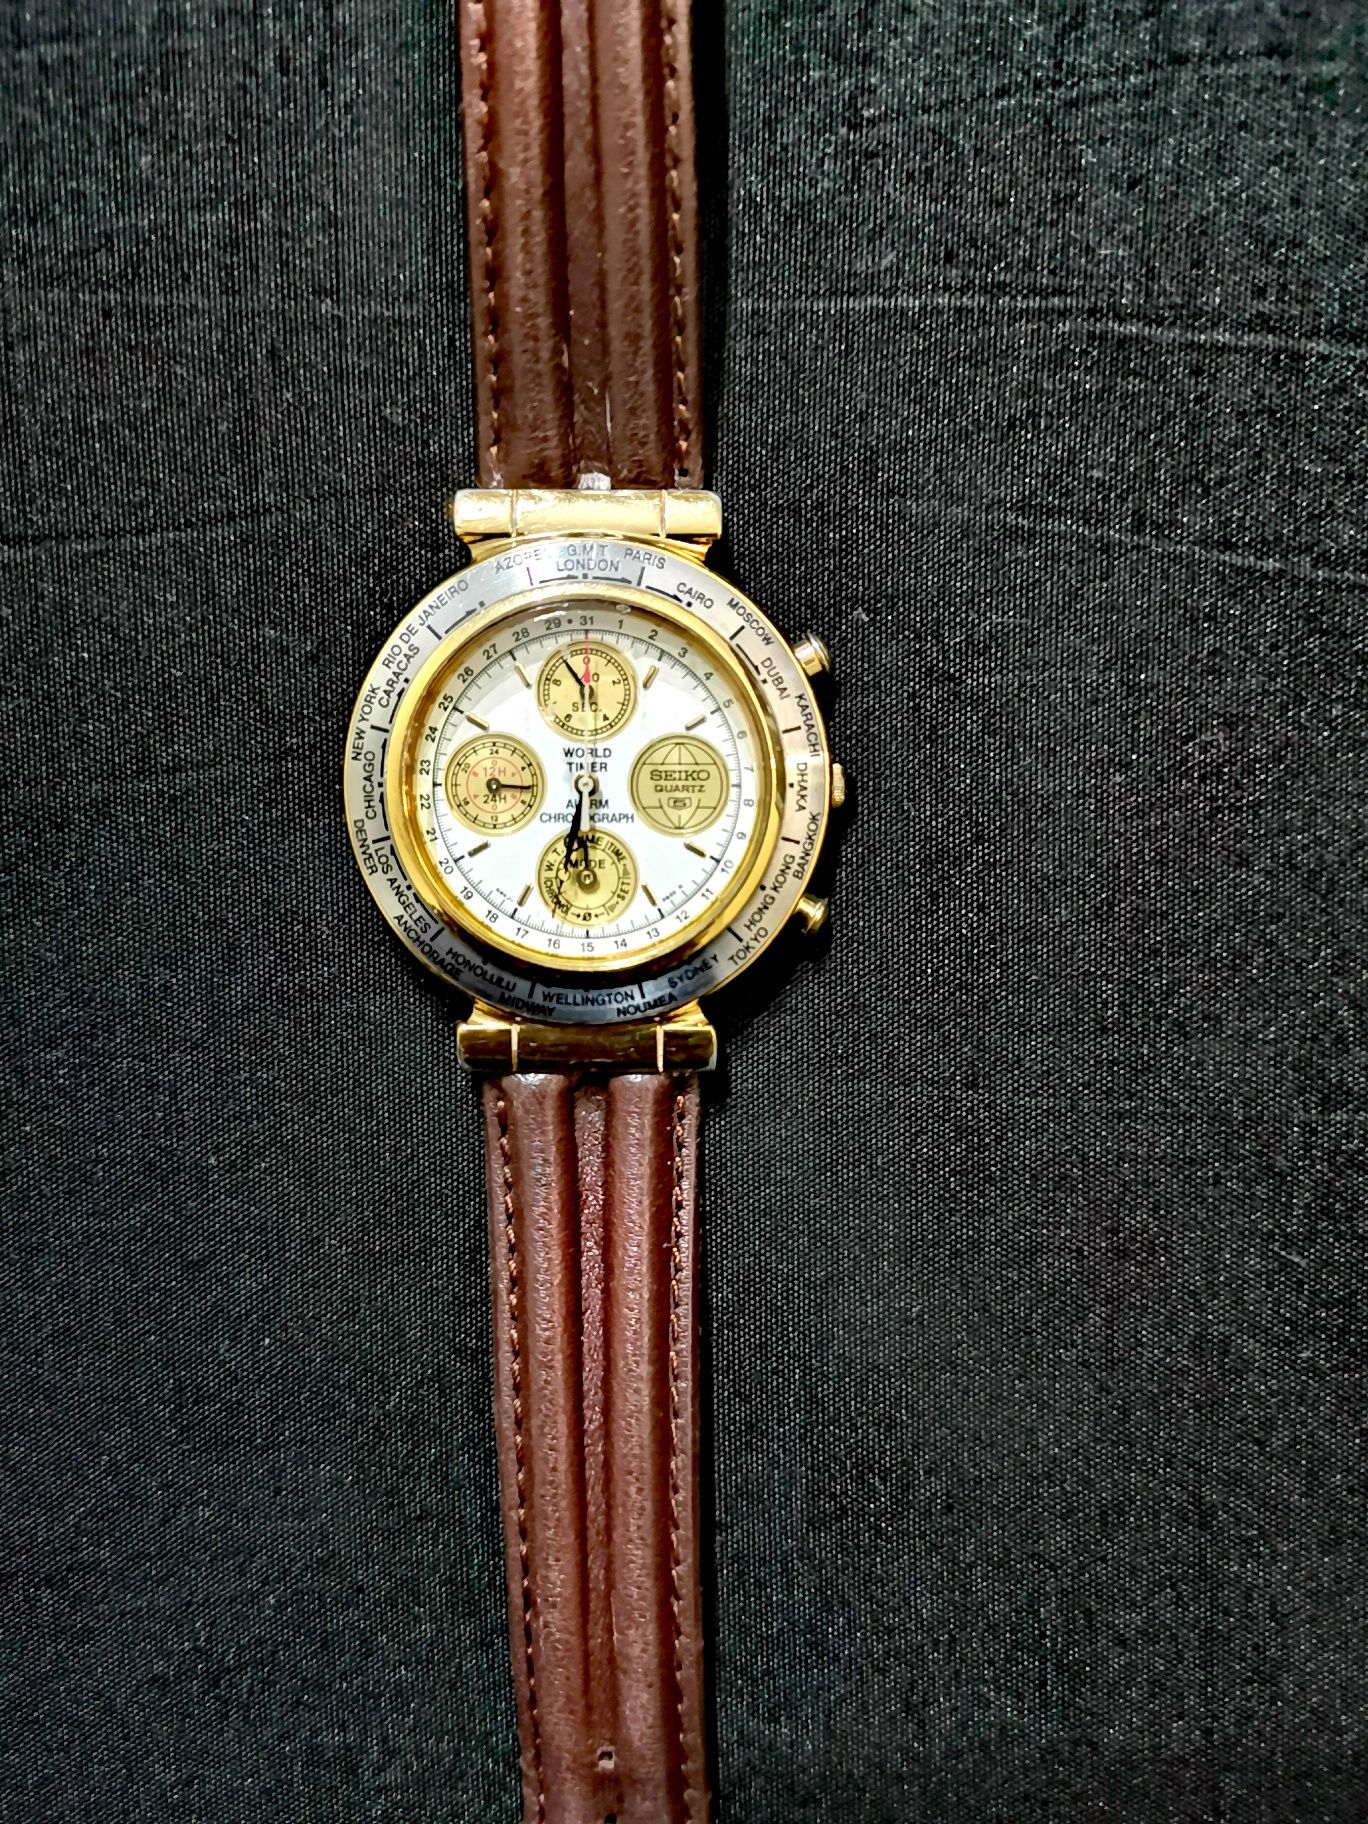 Relógio colecionador Seyko World Timer